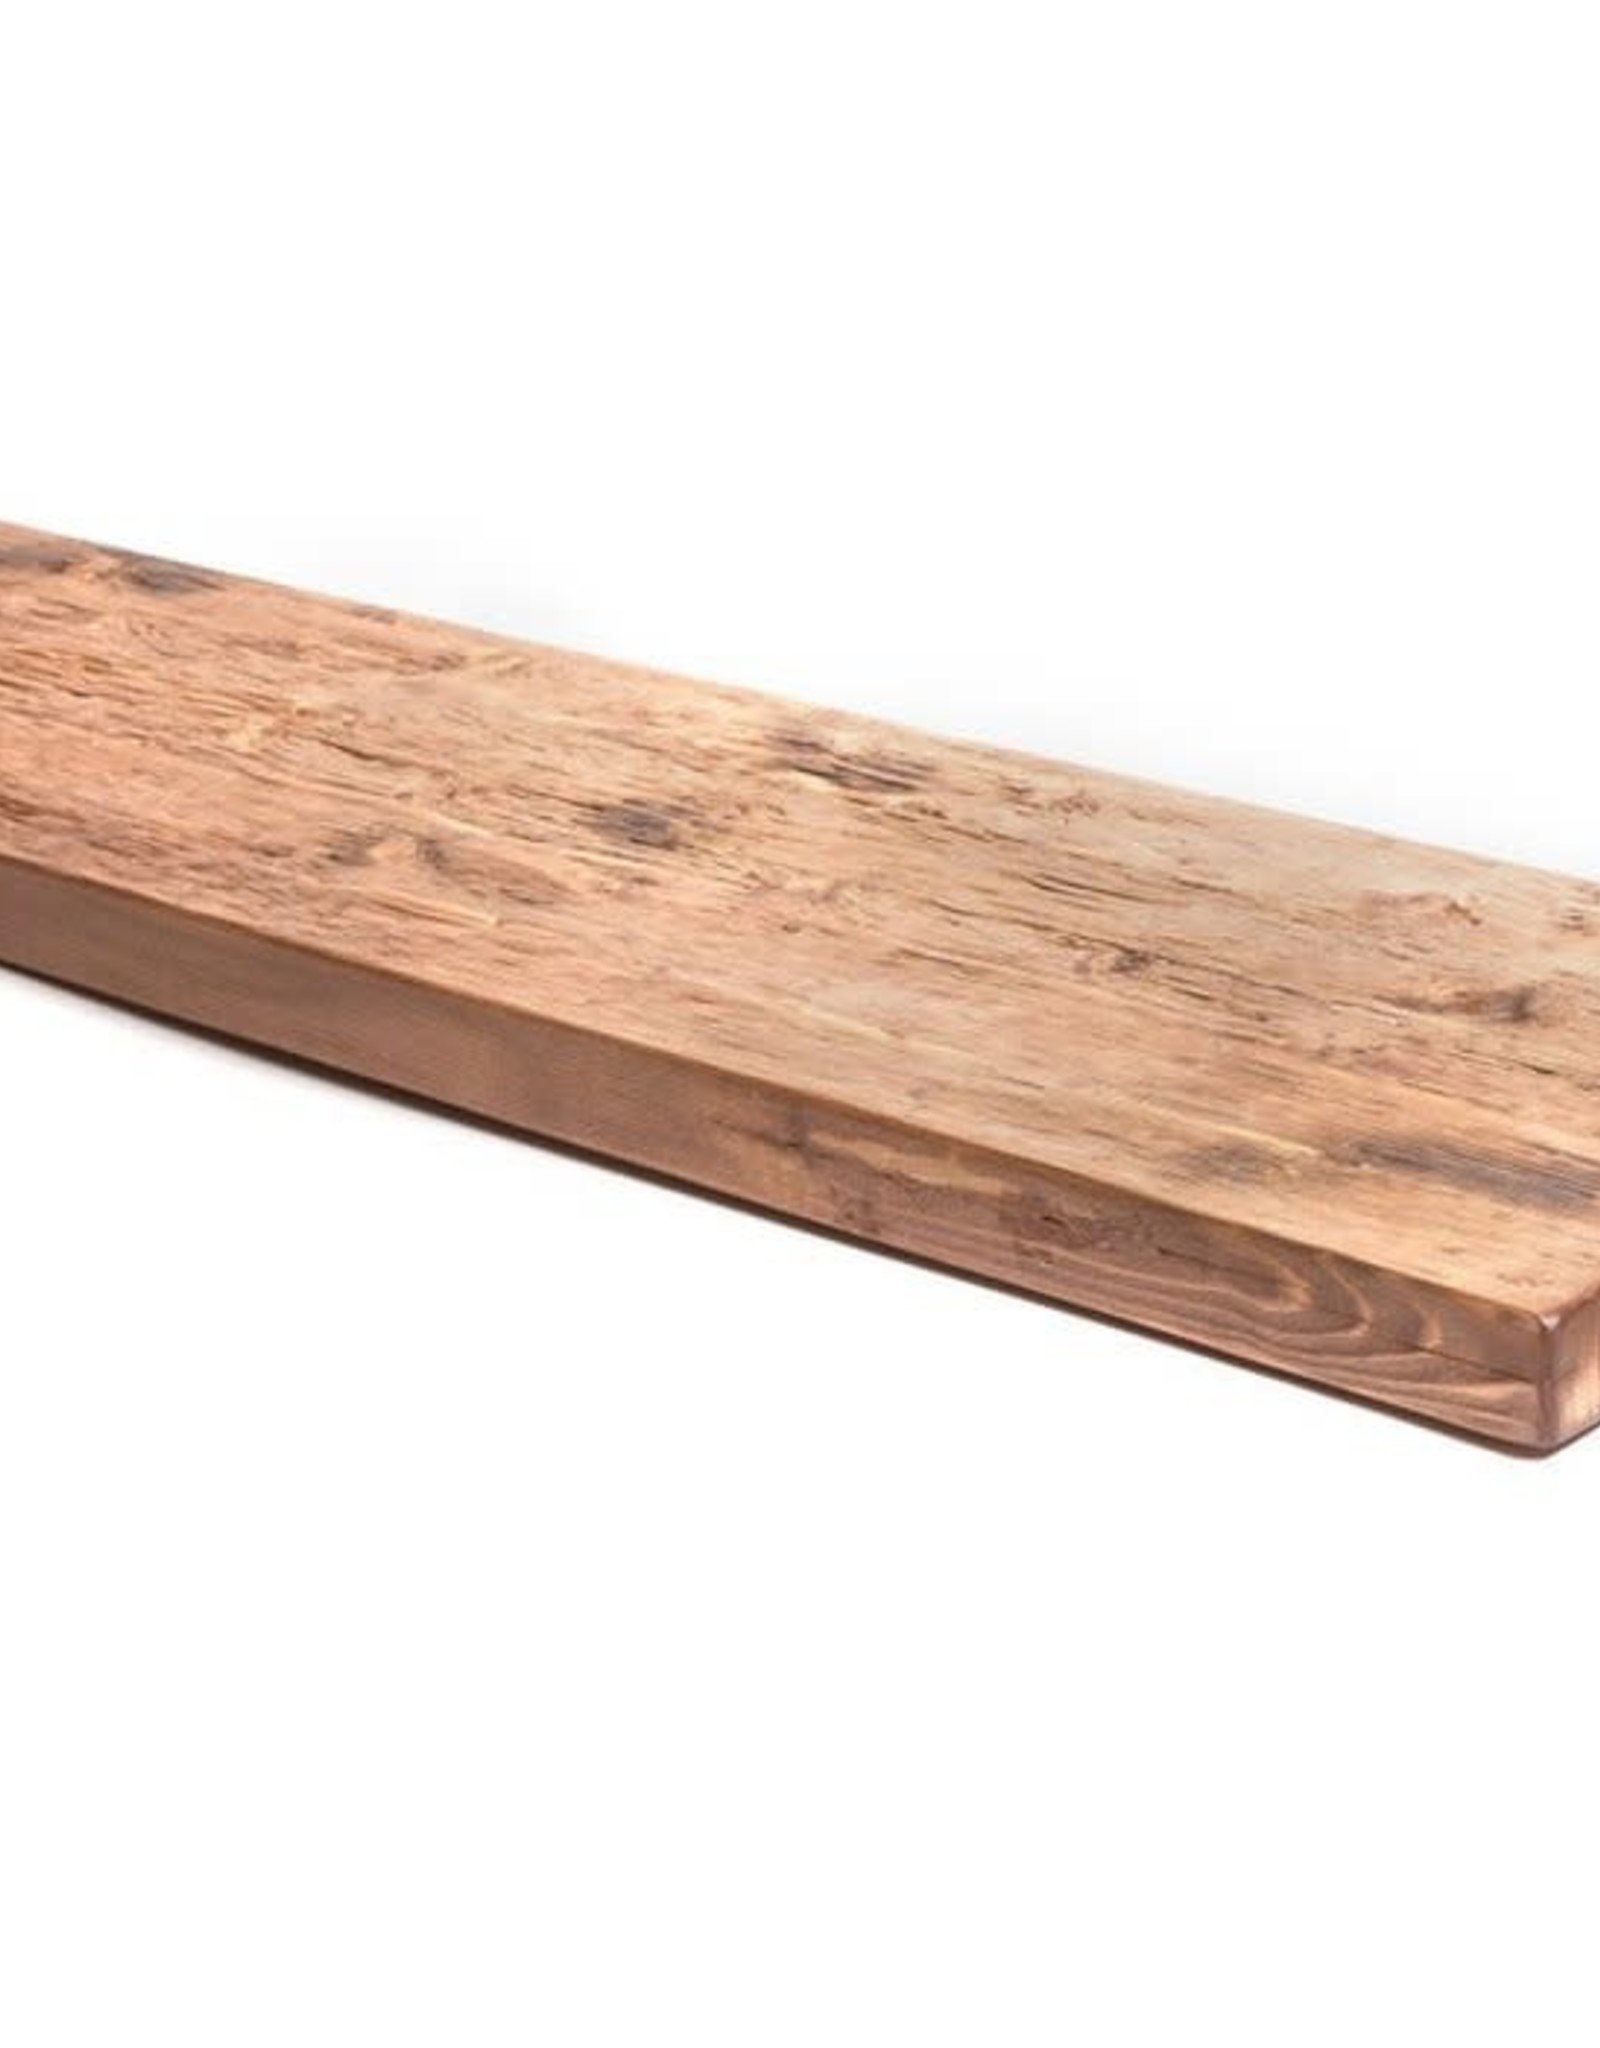 Large Farm Table Plank L40" W10"